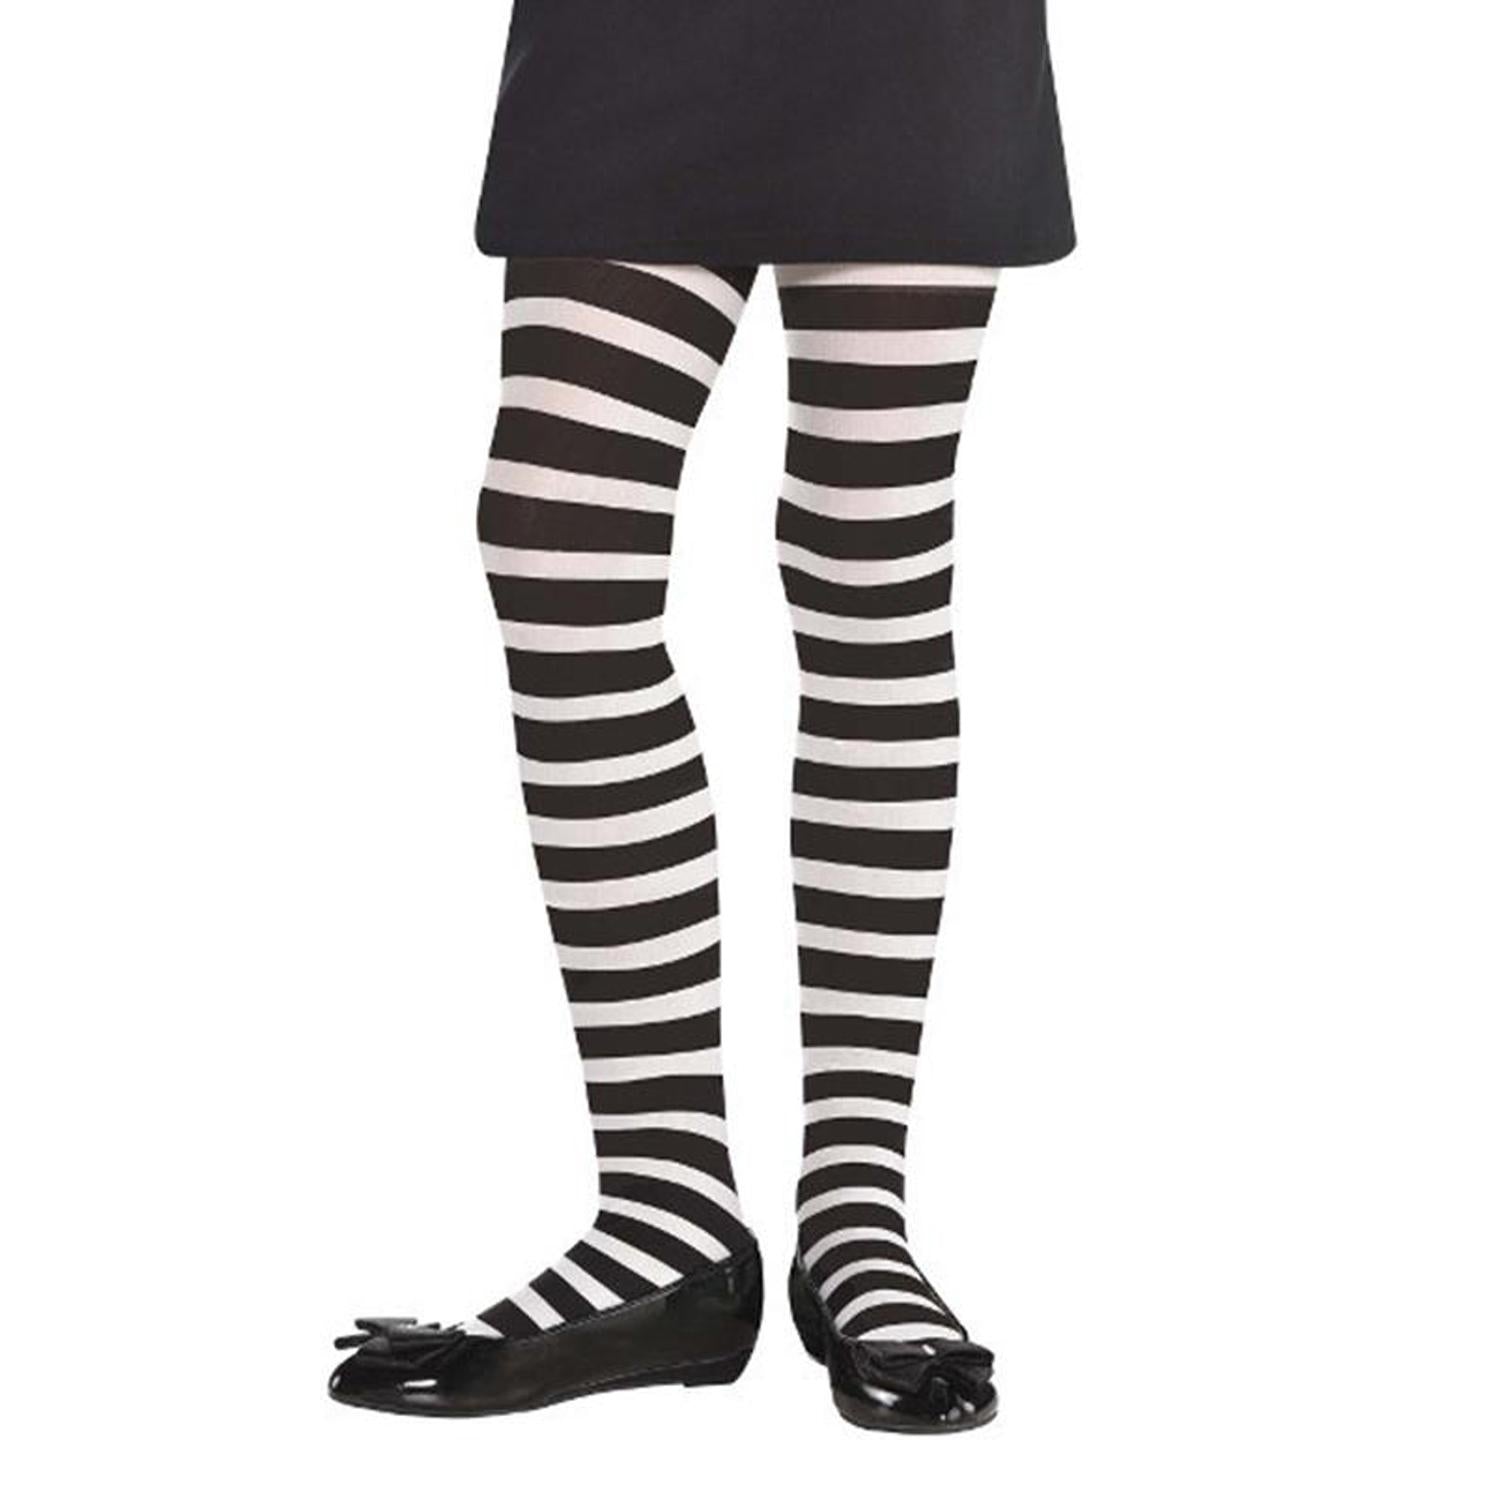 Child White & Black Striped Tights S-M Costumes & Apparel - Party Centre